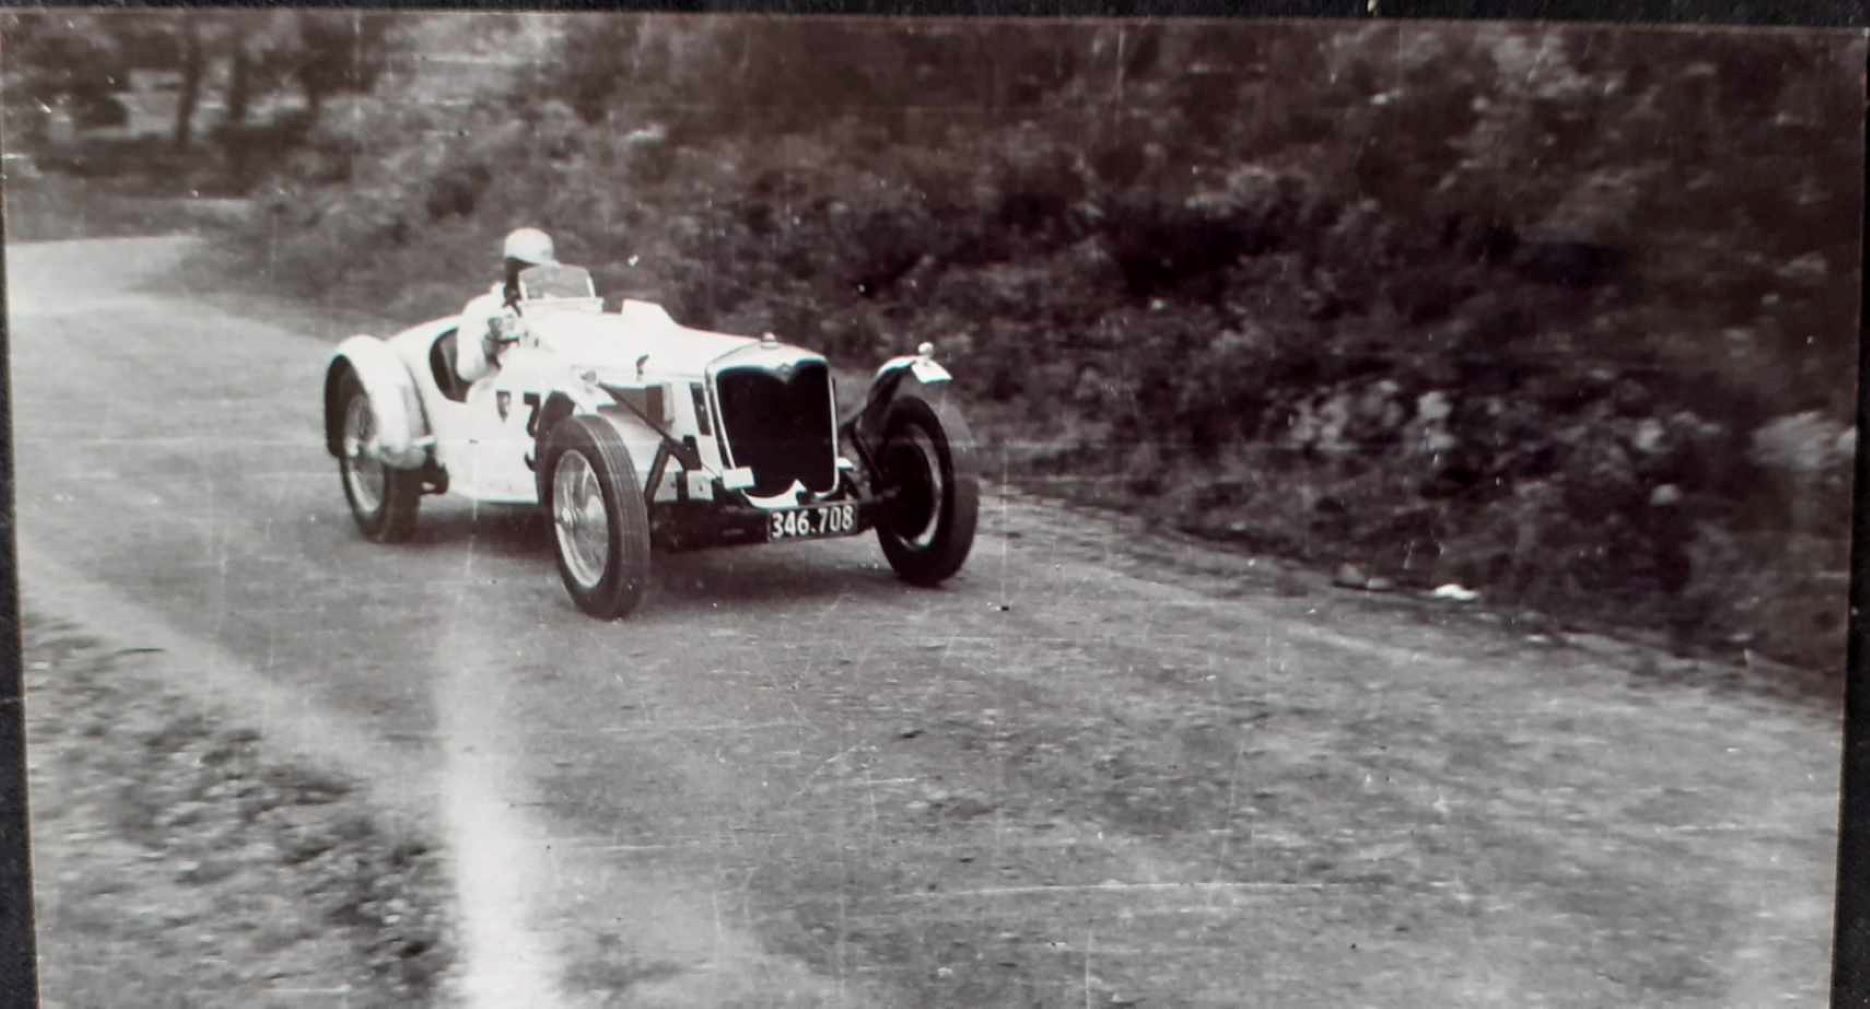 Name:  NSCC 1950 #0122 Riley Race #3 Q at Hill Climb - 346.708 1951 -56 plate 1950's - image Graeme Wel.jpg
Views: 216
Size:  178.4 KB